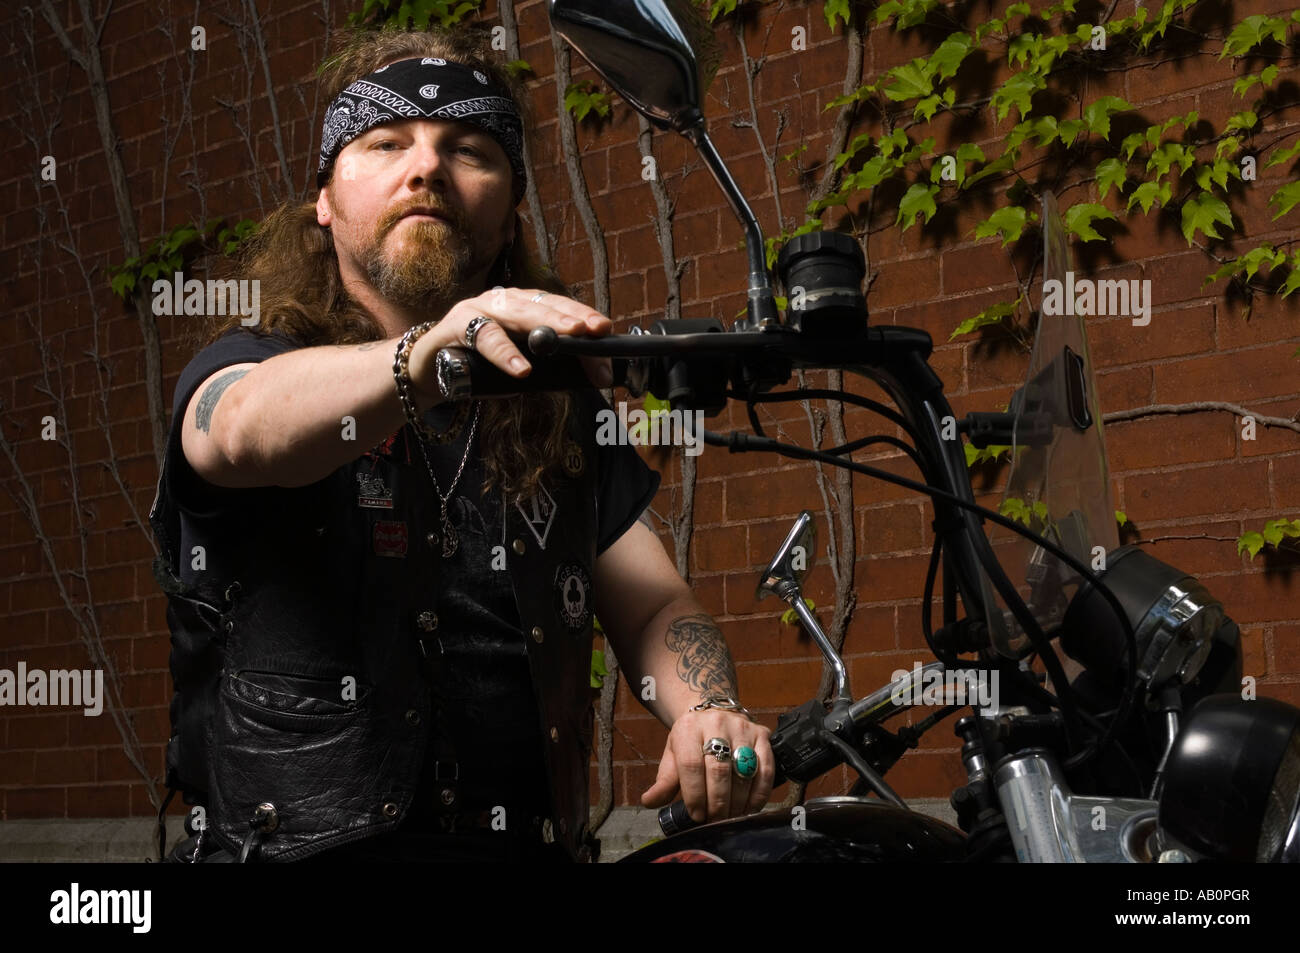 Biker behind bars with bandana Stock Photo - Alamy